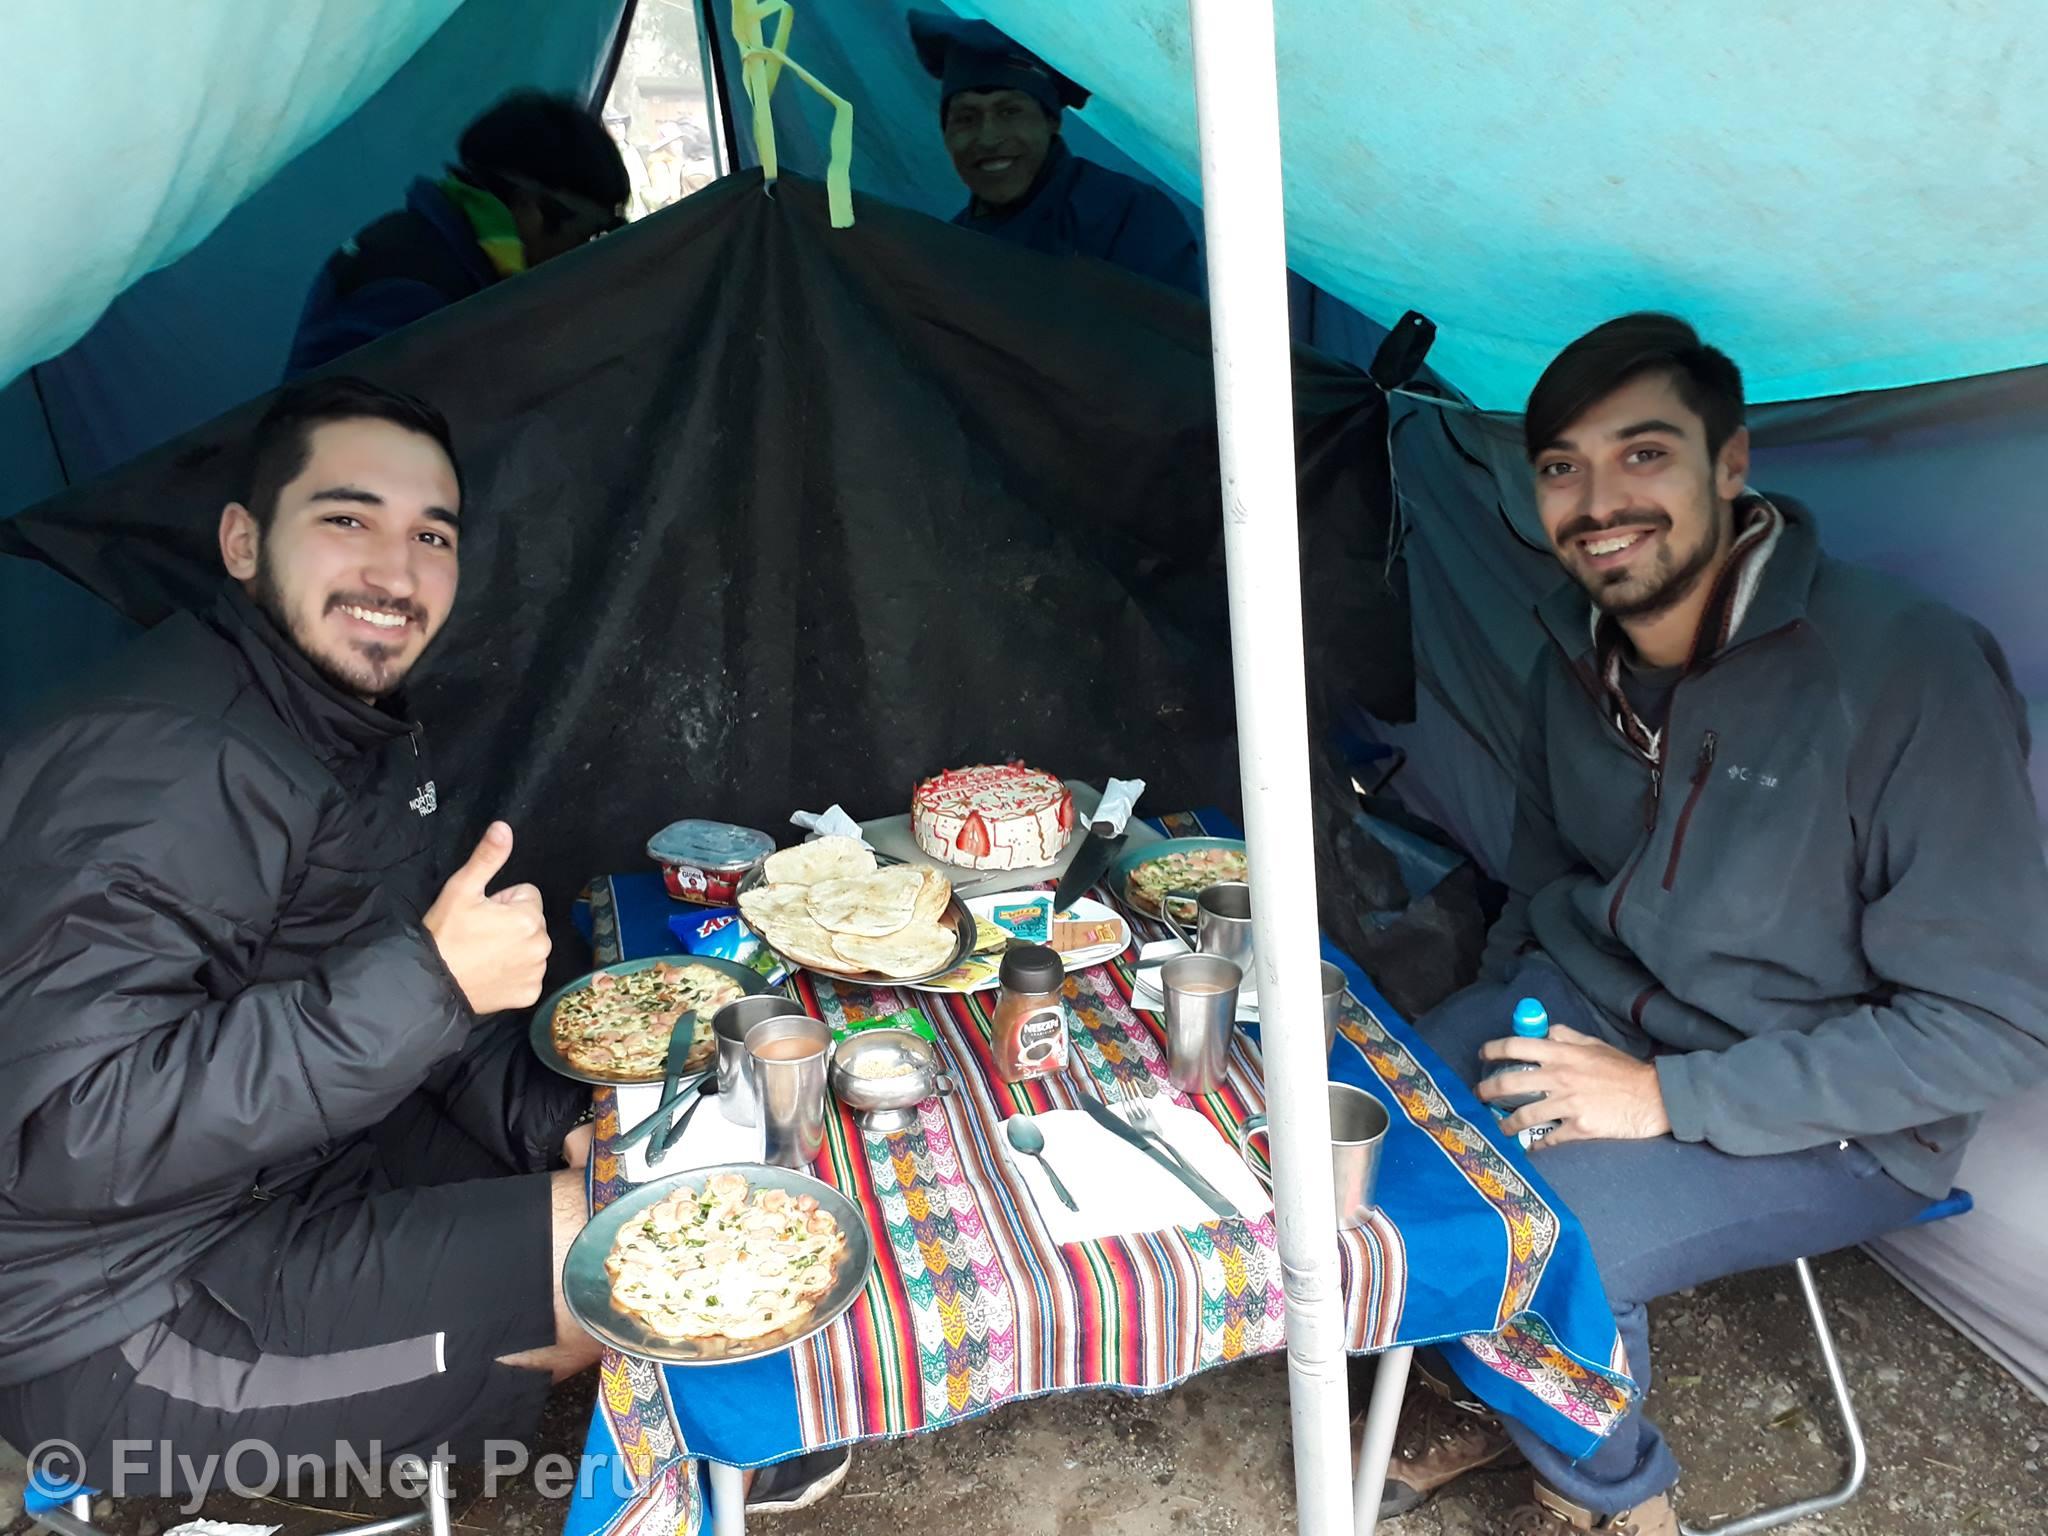 Álbum de fotos: Lunch during the trek, Inca Trail